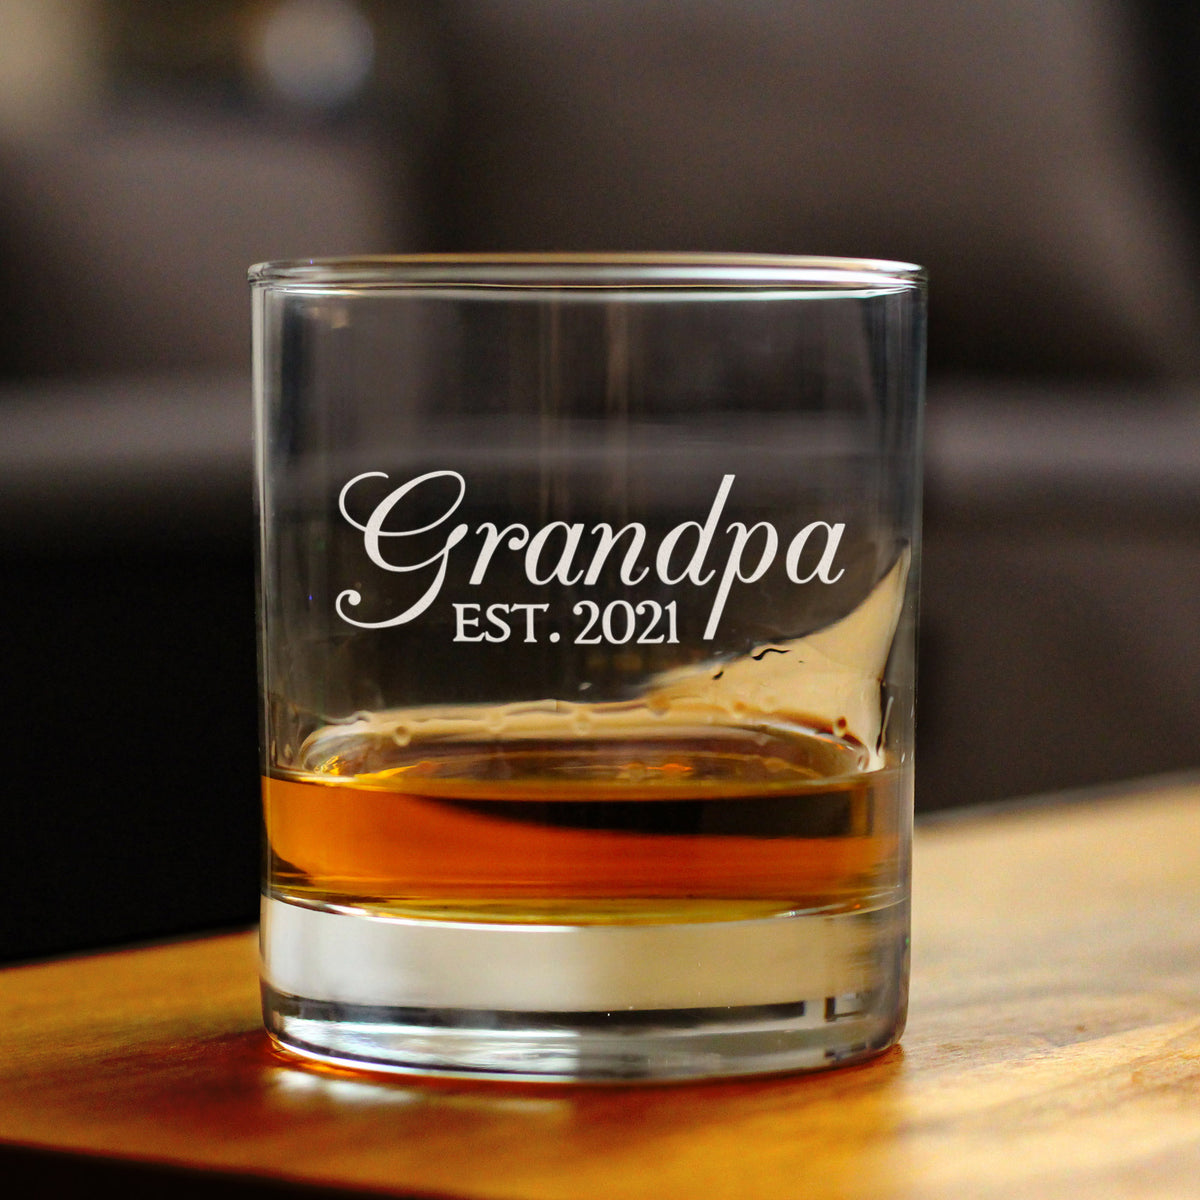 Grandpa Est 2021 - New Grandfather Whiskey Rocks Glass Gift for First Time Grandparents - Decorative 10.25 Oz Glasses